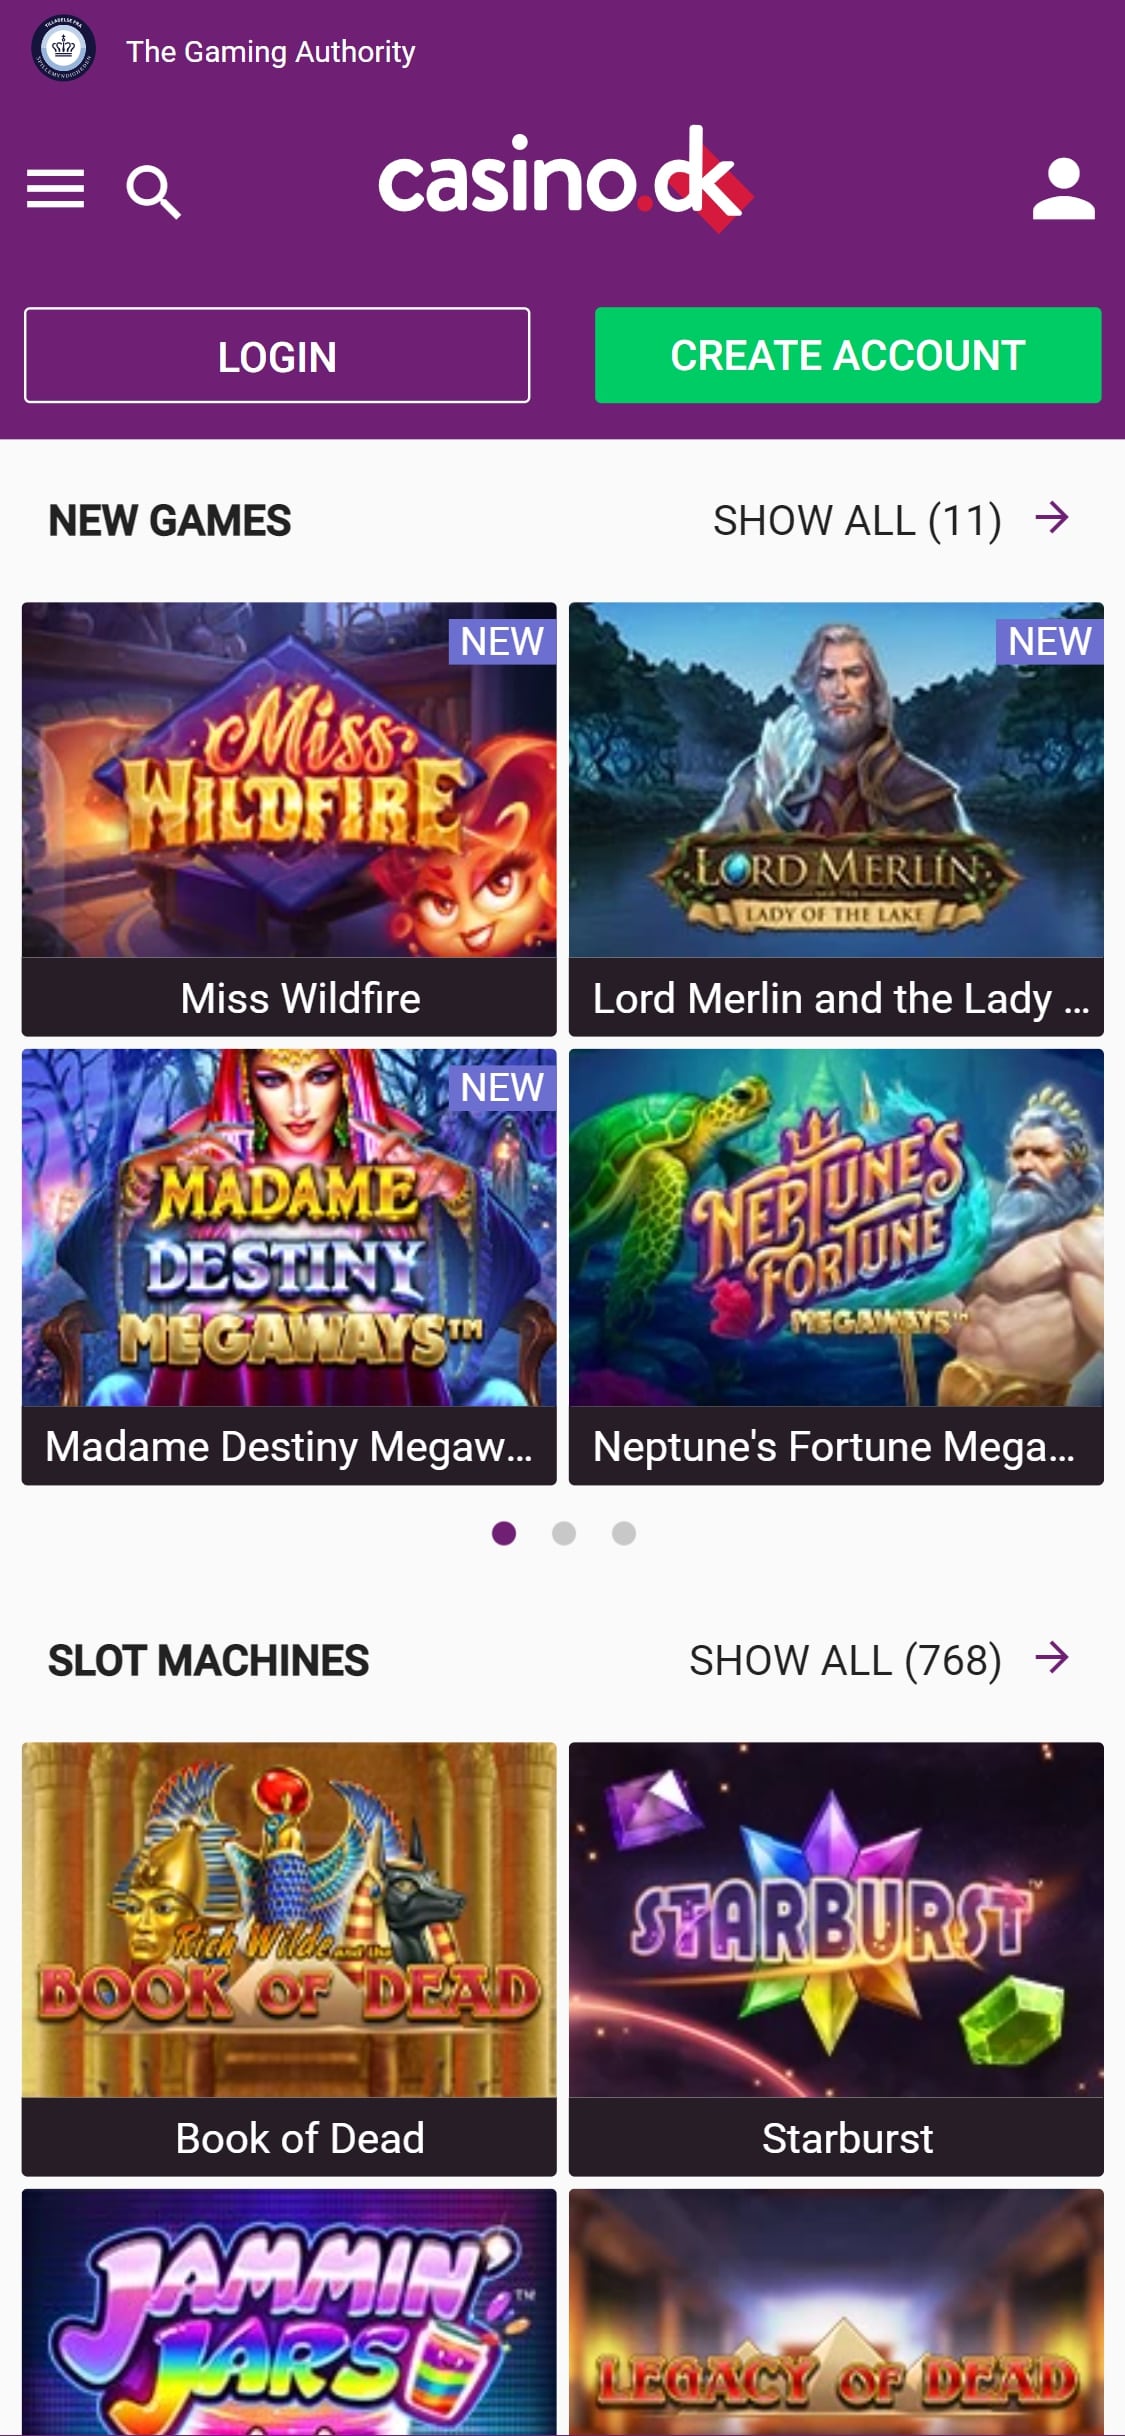 Casino DK Mobile Games Review